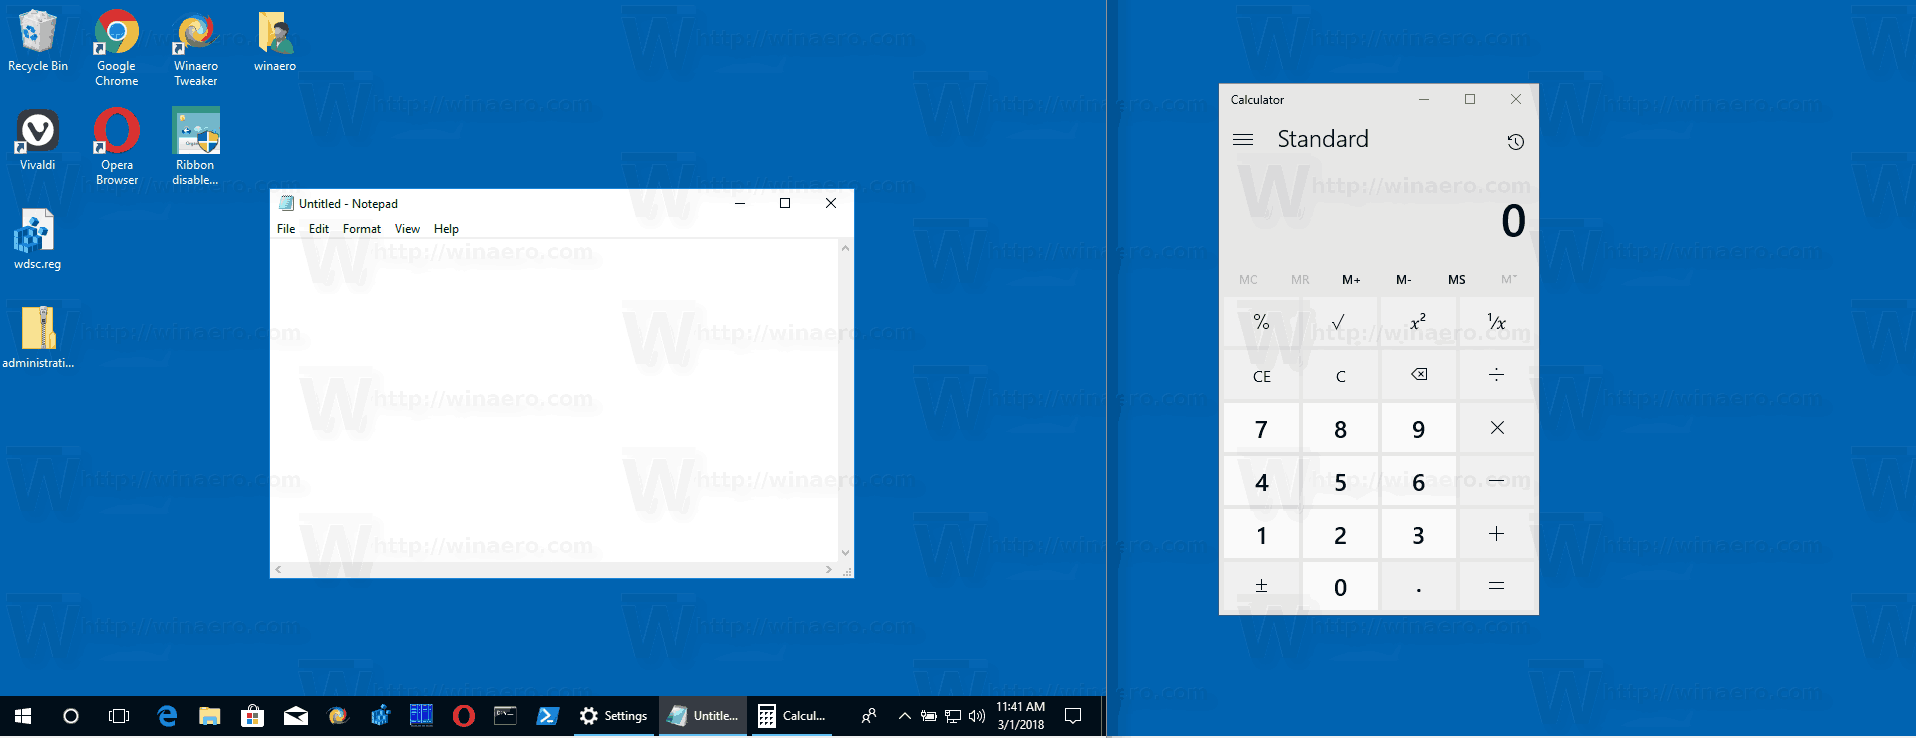 taskbar multiple screens windows 10